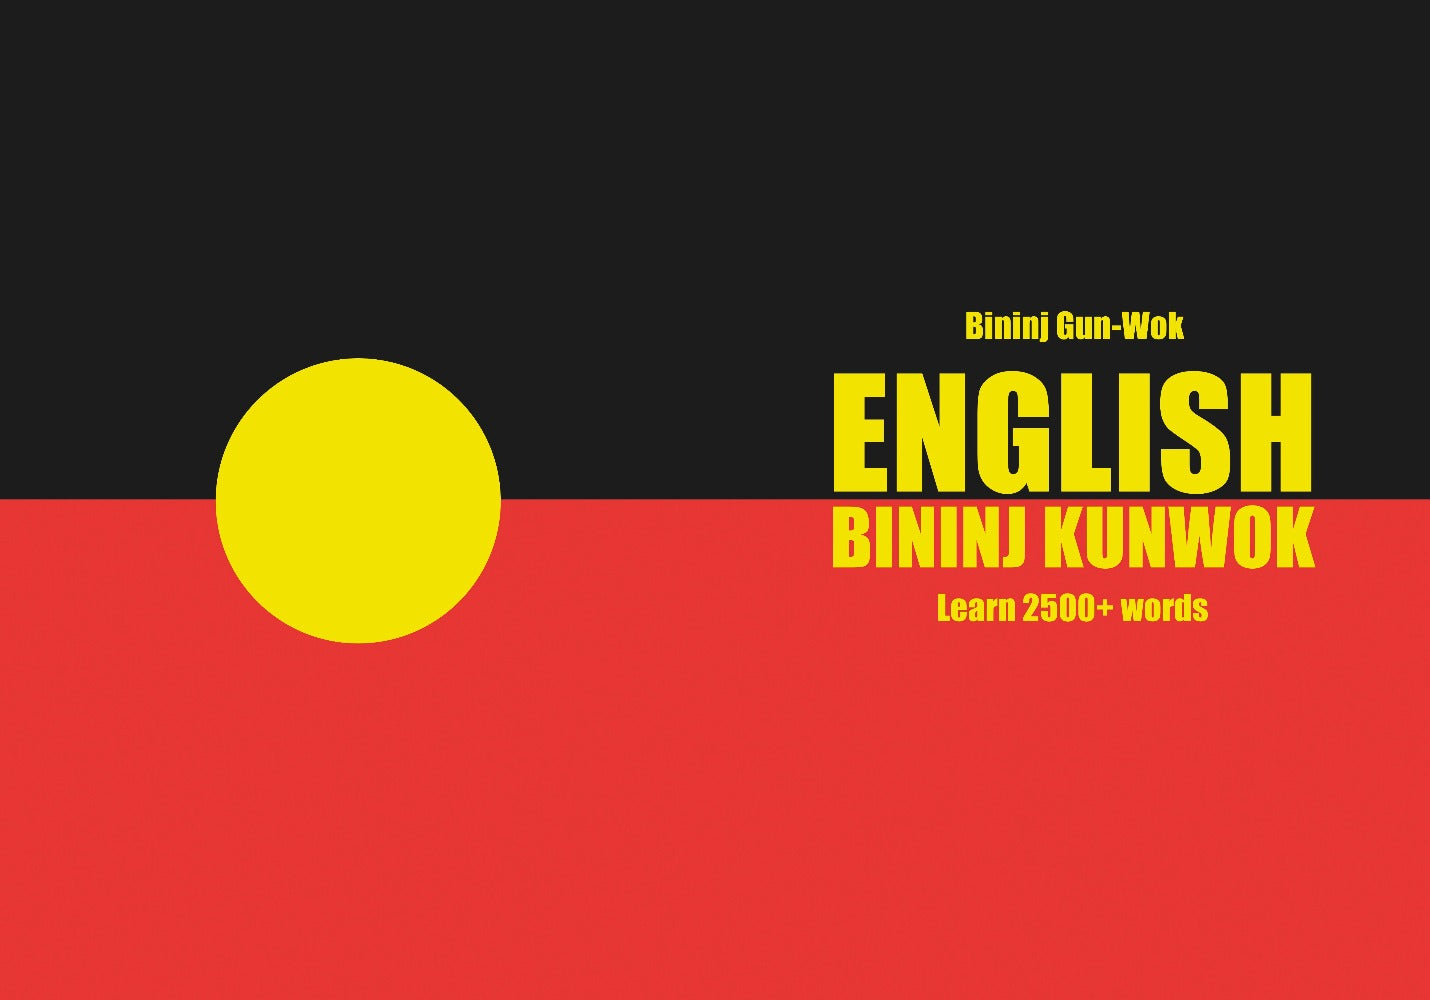 Bininj Kunwok language learning notebook cover